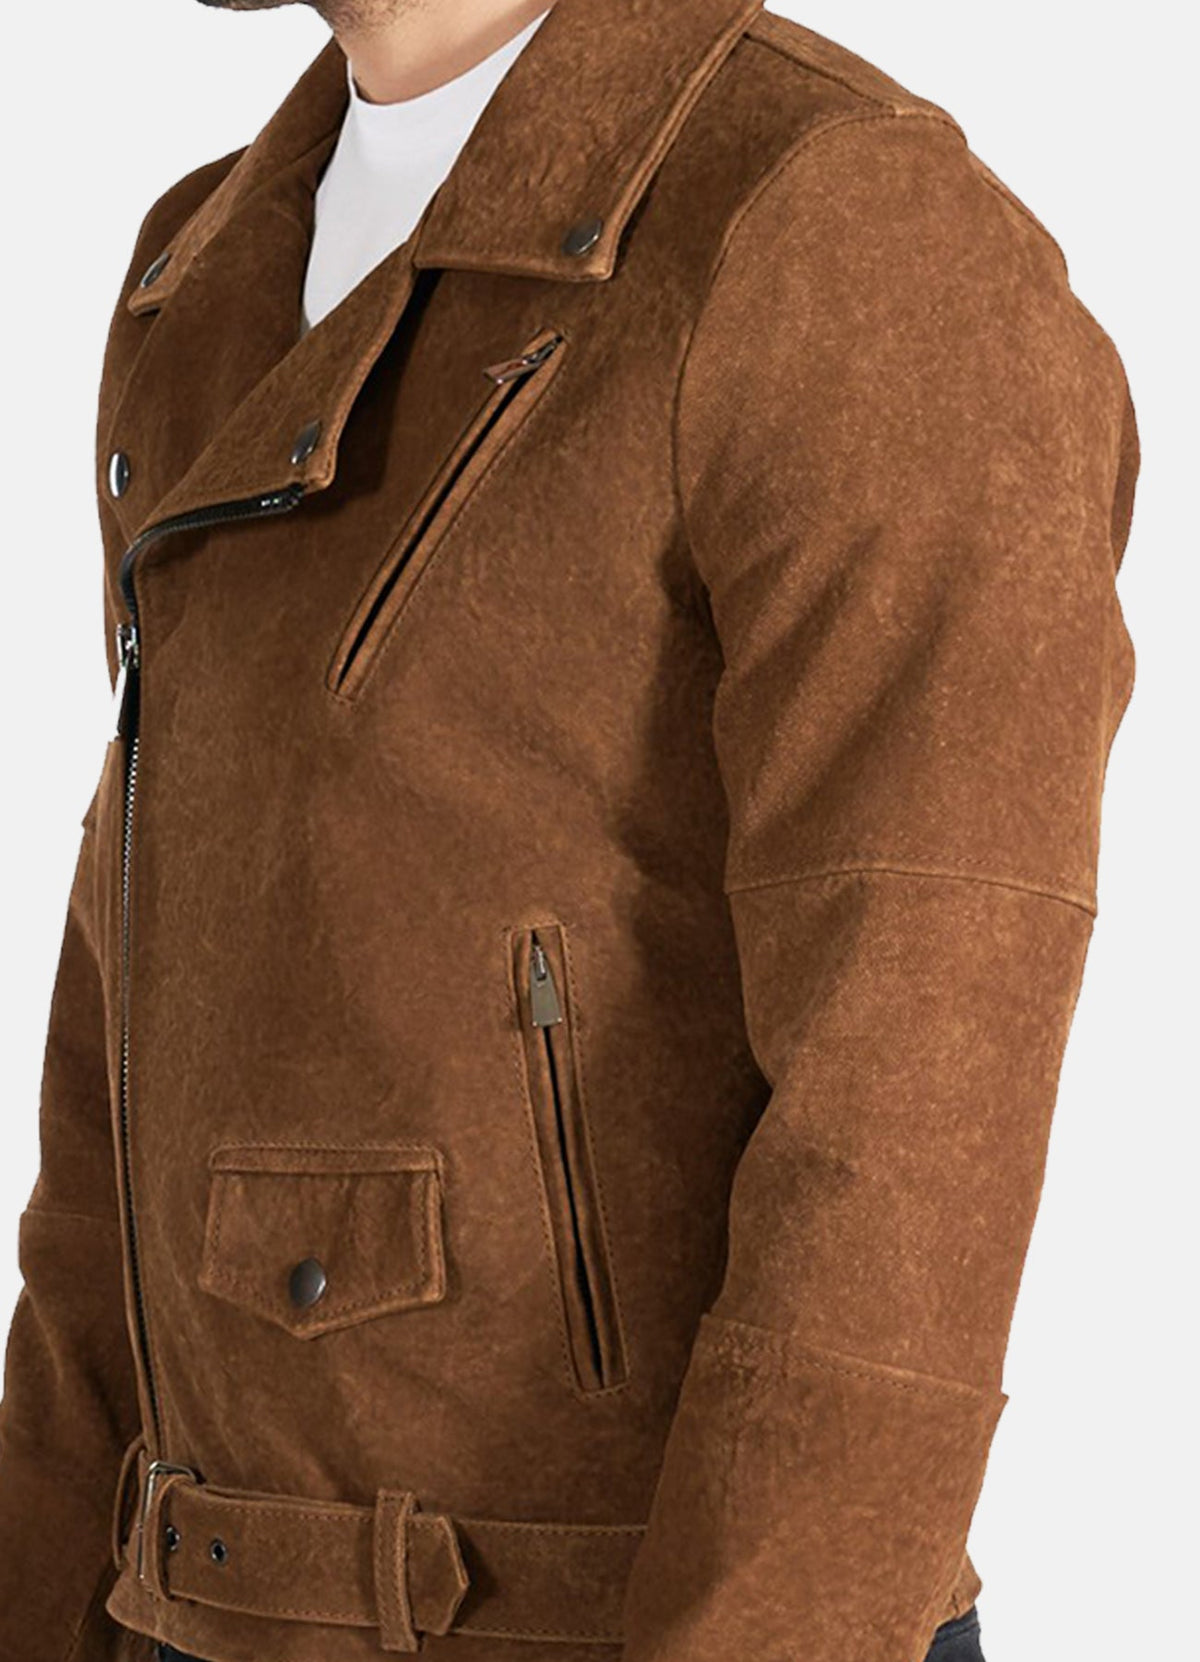 Mens Camel Brown Suede Leather Jacket